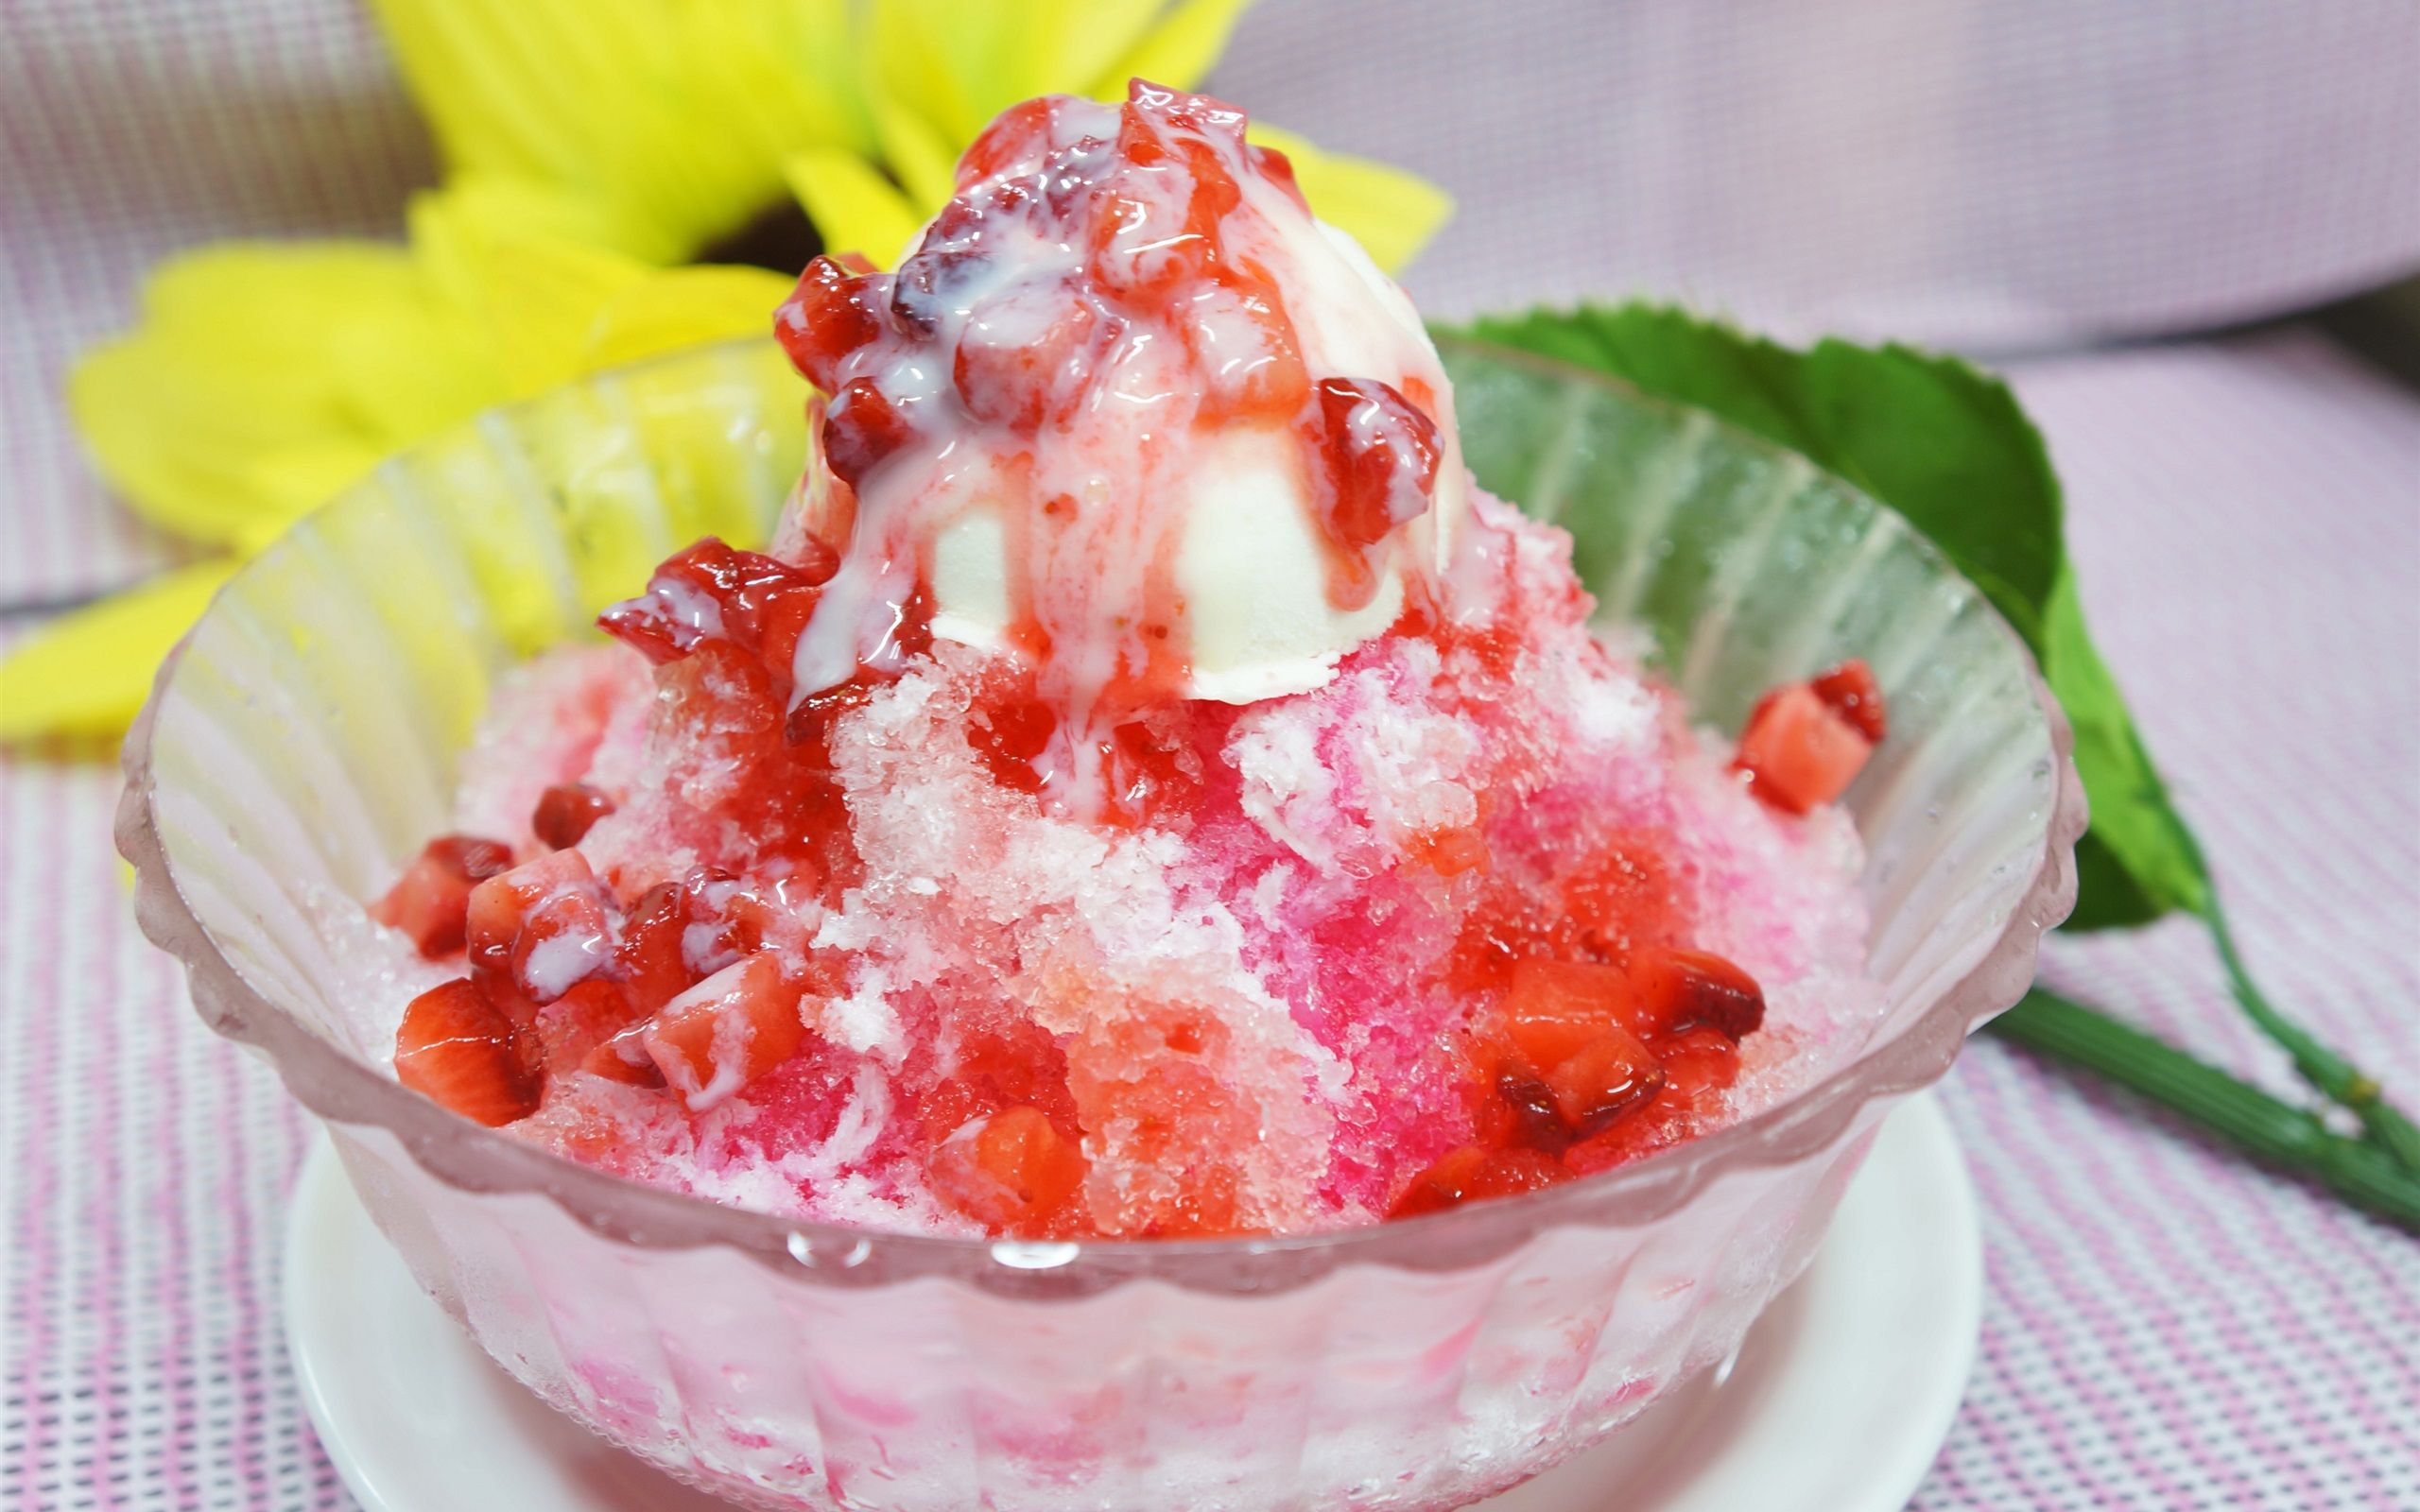 Wallpaper Strawberries shaved ice, cream, dessert, tasty food 3840x2160 UHD 4K Picture, Image